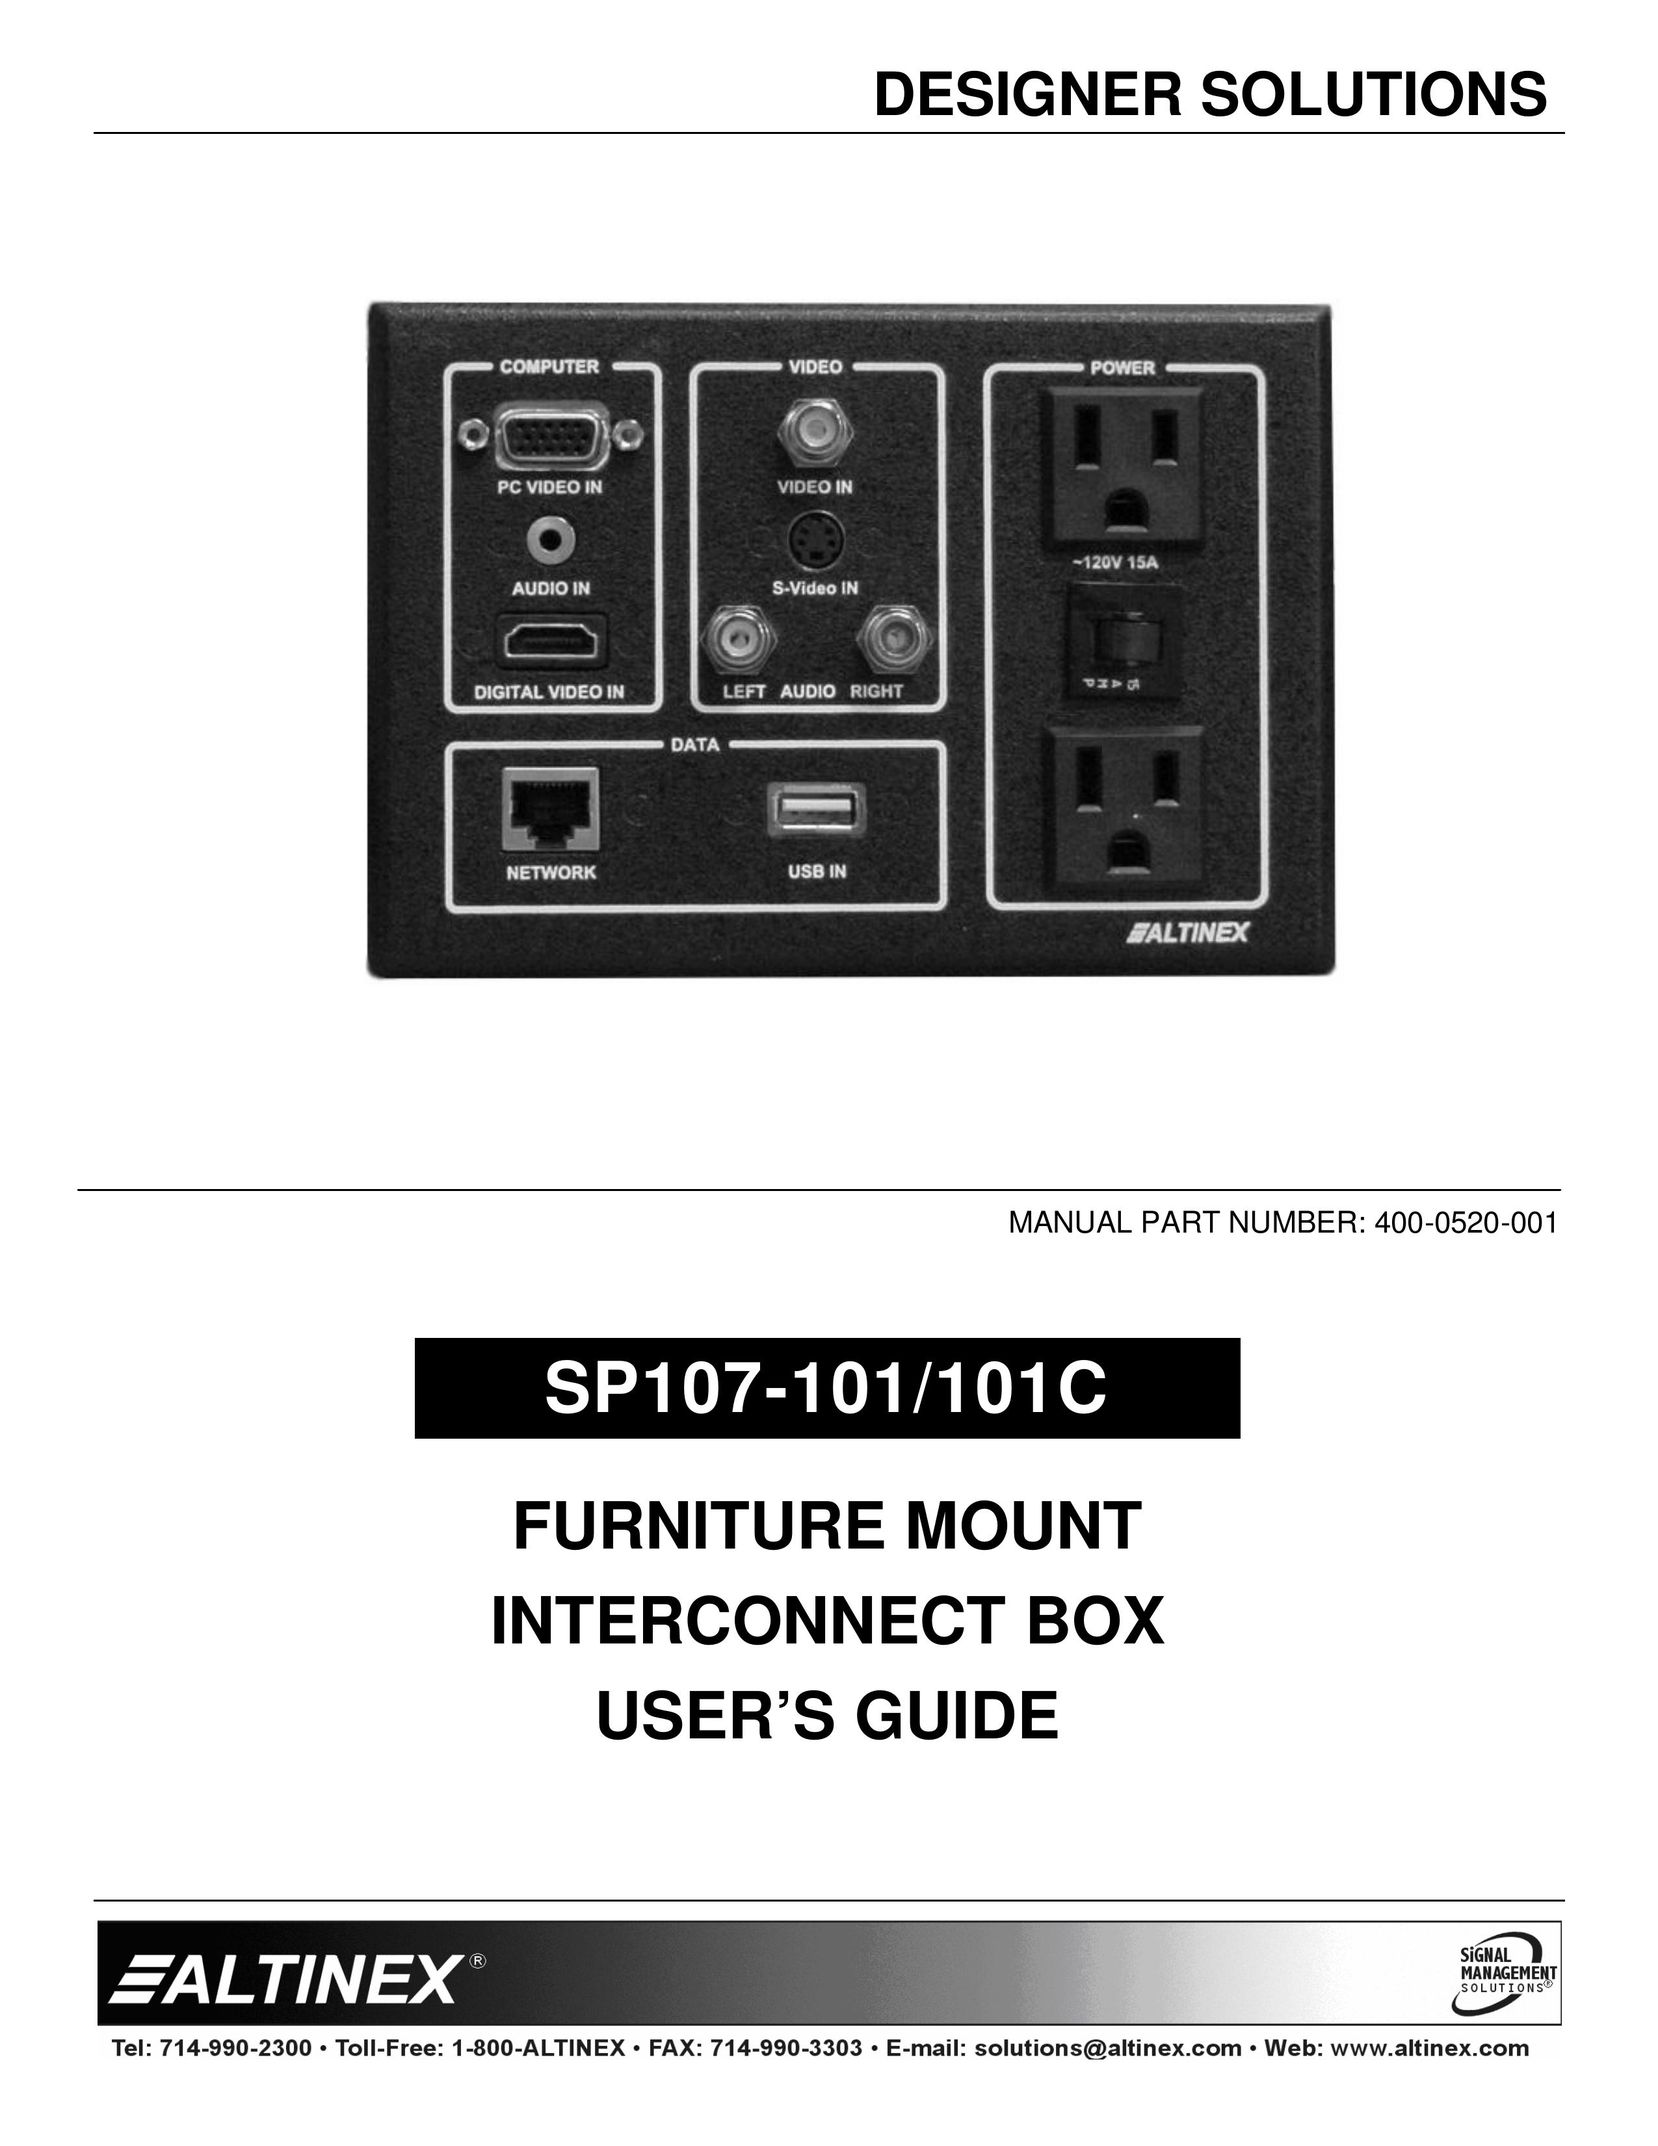 Altinex SP107-101/101C Switch User Manual